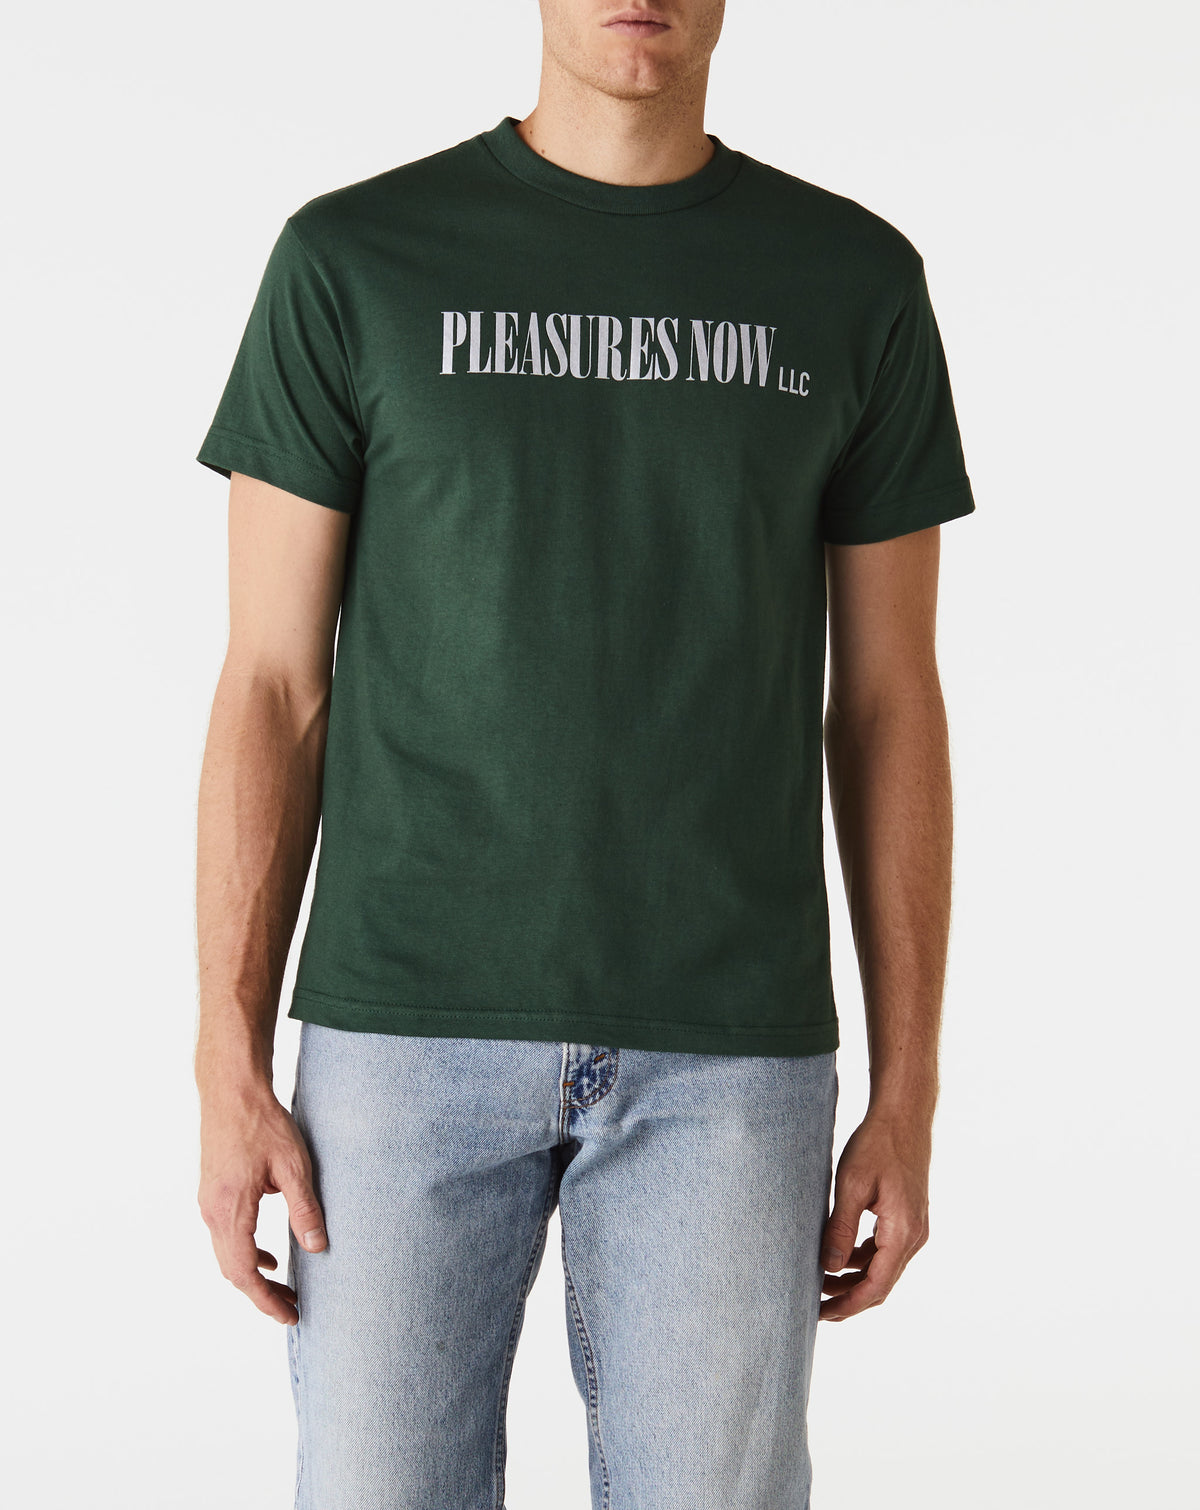 Pleasures LLC T-Shirt - Rule of Next Apparel